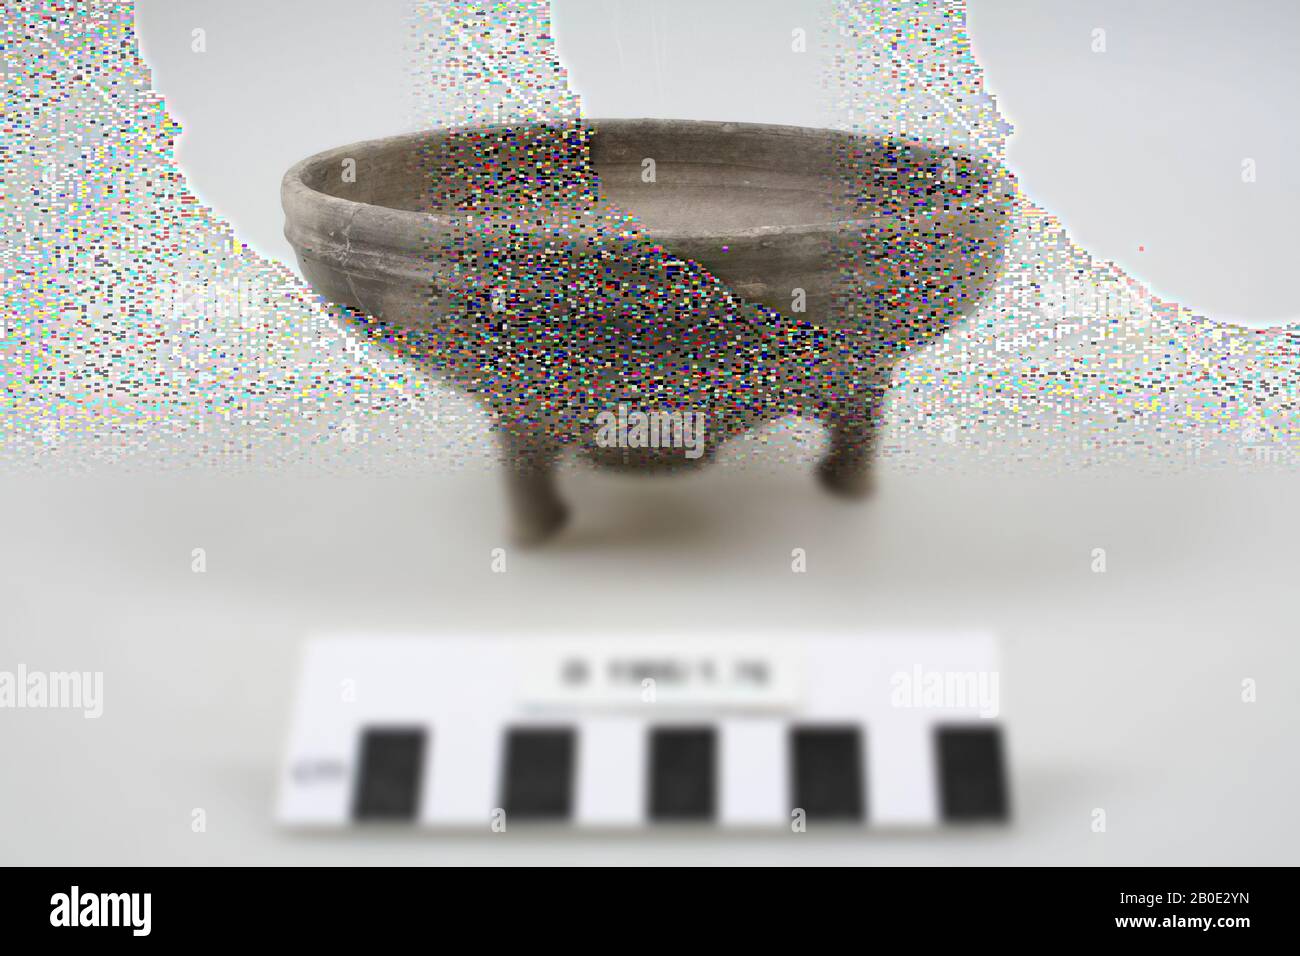 crockery, earthenware, H 7.2 cm, D 14.6 cm, Iran Stock Photo